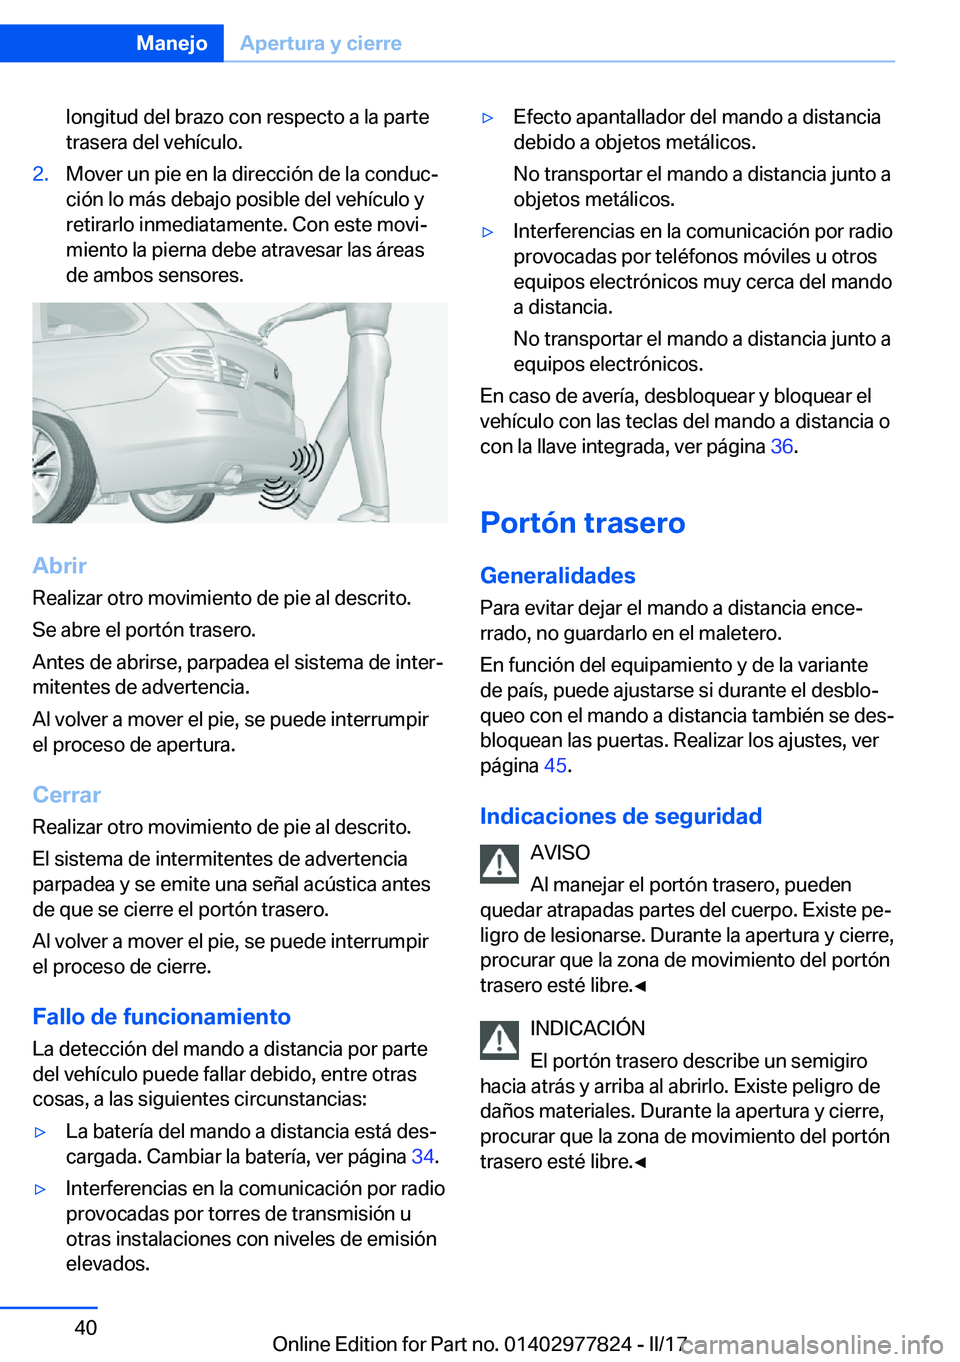 BMW X3 2017  Manuales de Empleo (in Spanish) �l�o�n�g�i�t�u�d� �d�e�l� �b�r�a�z�o� �c�o�n� �r�e�s�p�e�c�t�o� �a� �l�a� �p�a�r�t�e�t�r�a�s�e�r�a� �d�e�l� �v�e�h�